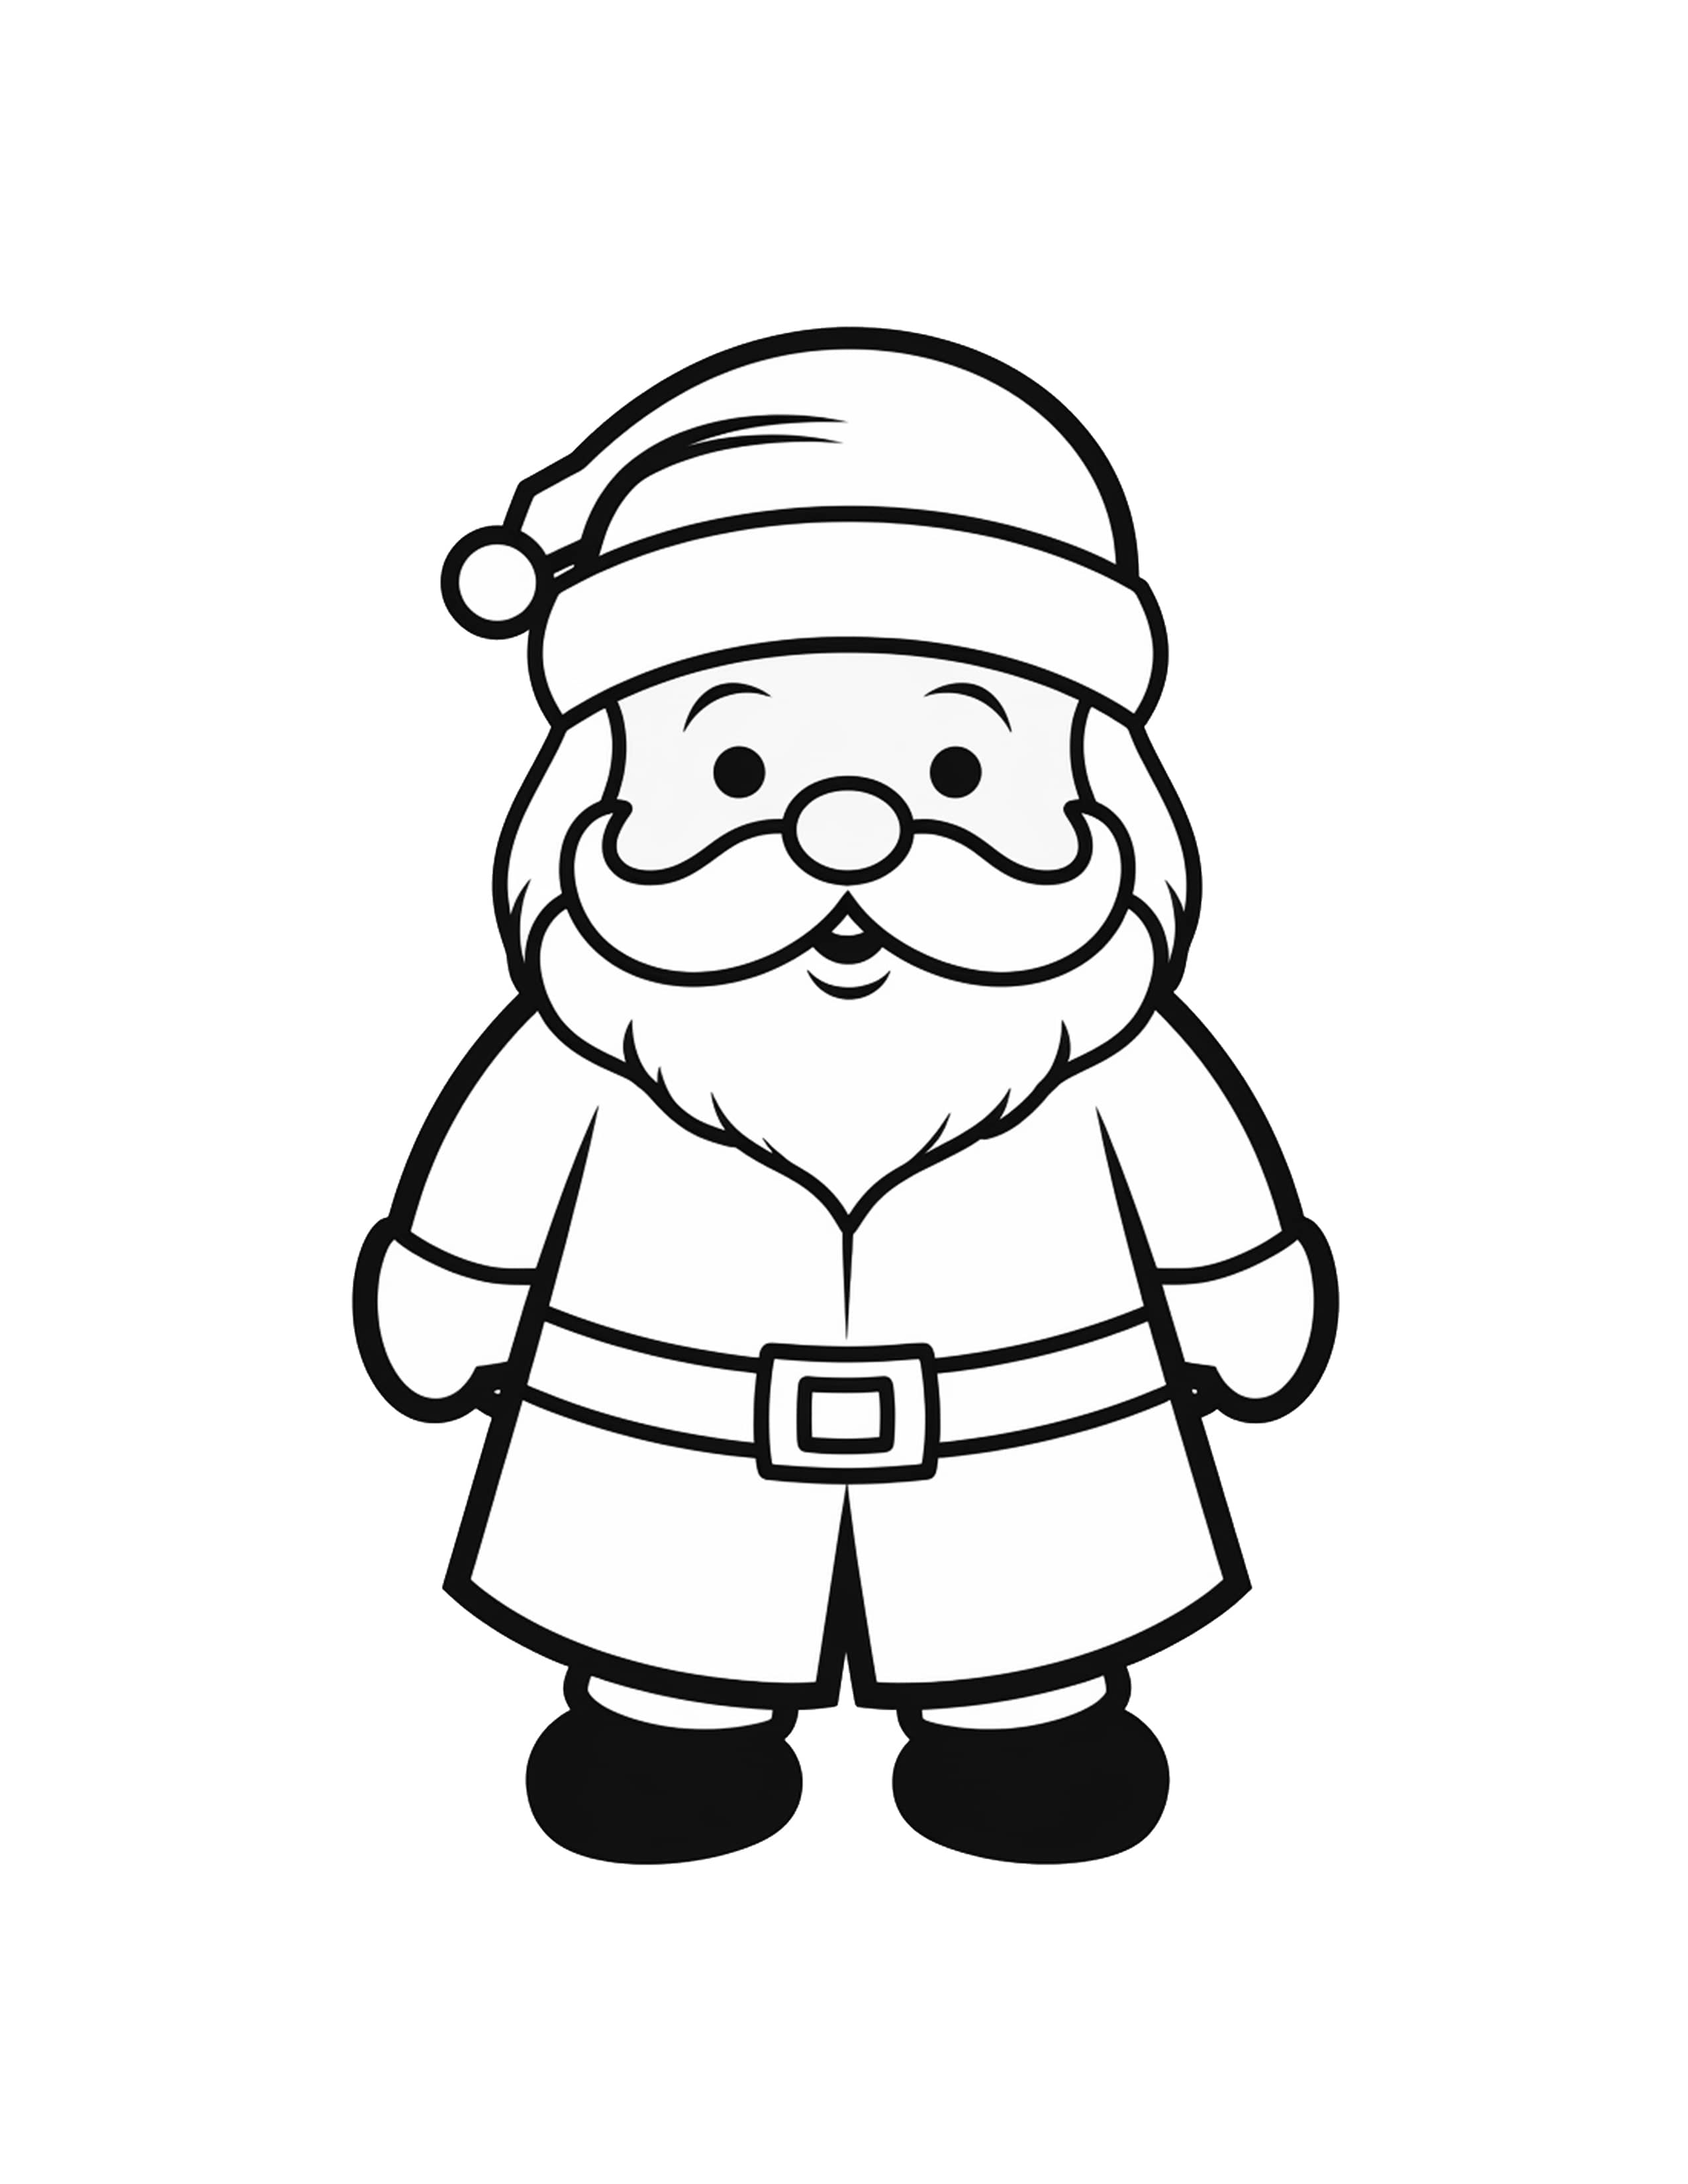 How To Draw Cartoon Santa Claus - Art For Kids Hub -